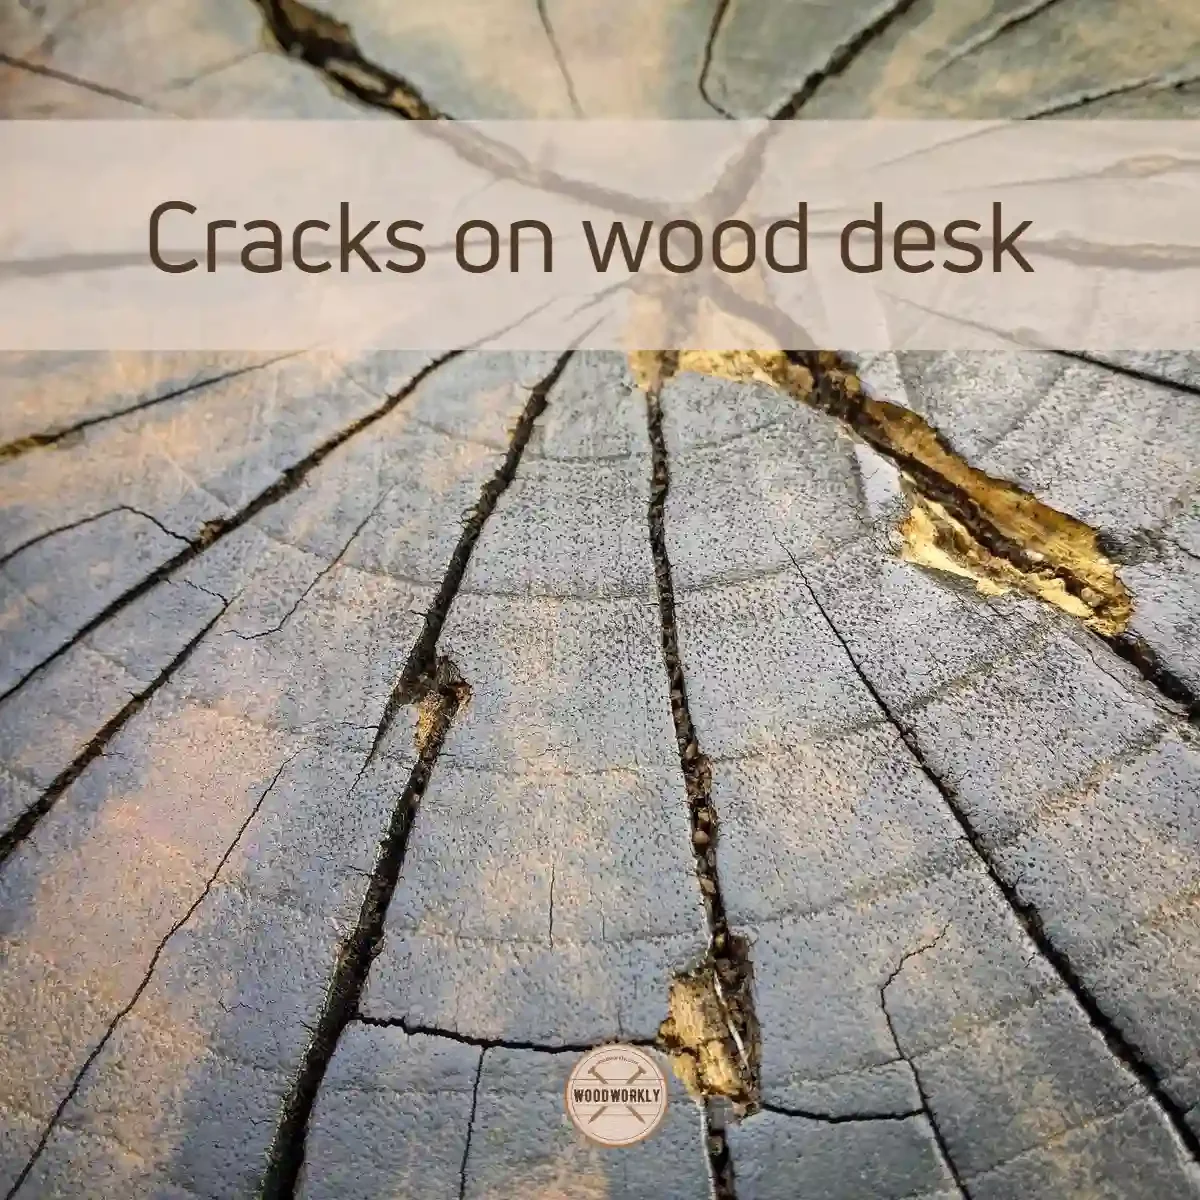 Cracks on wood desk